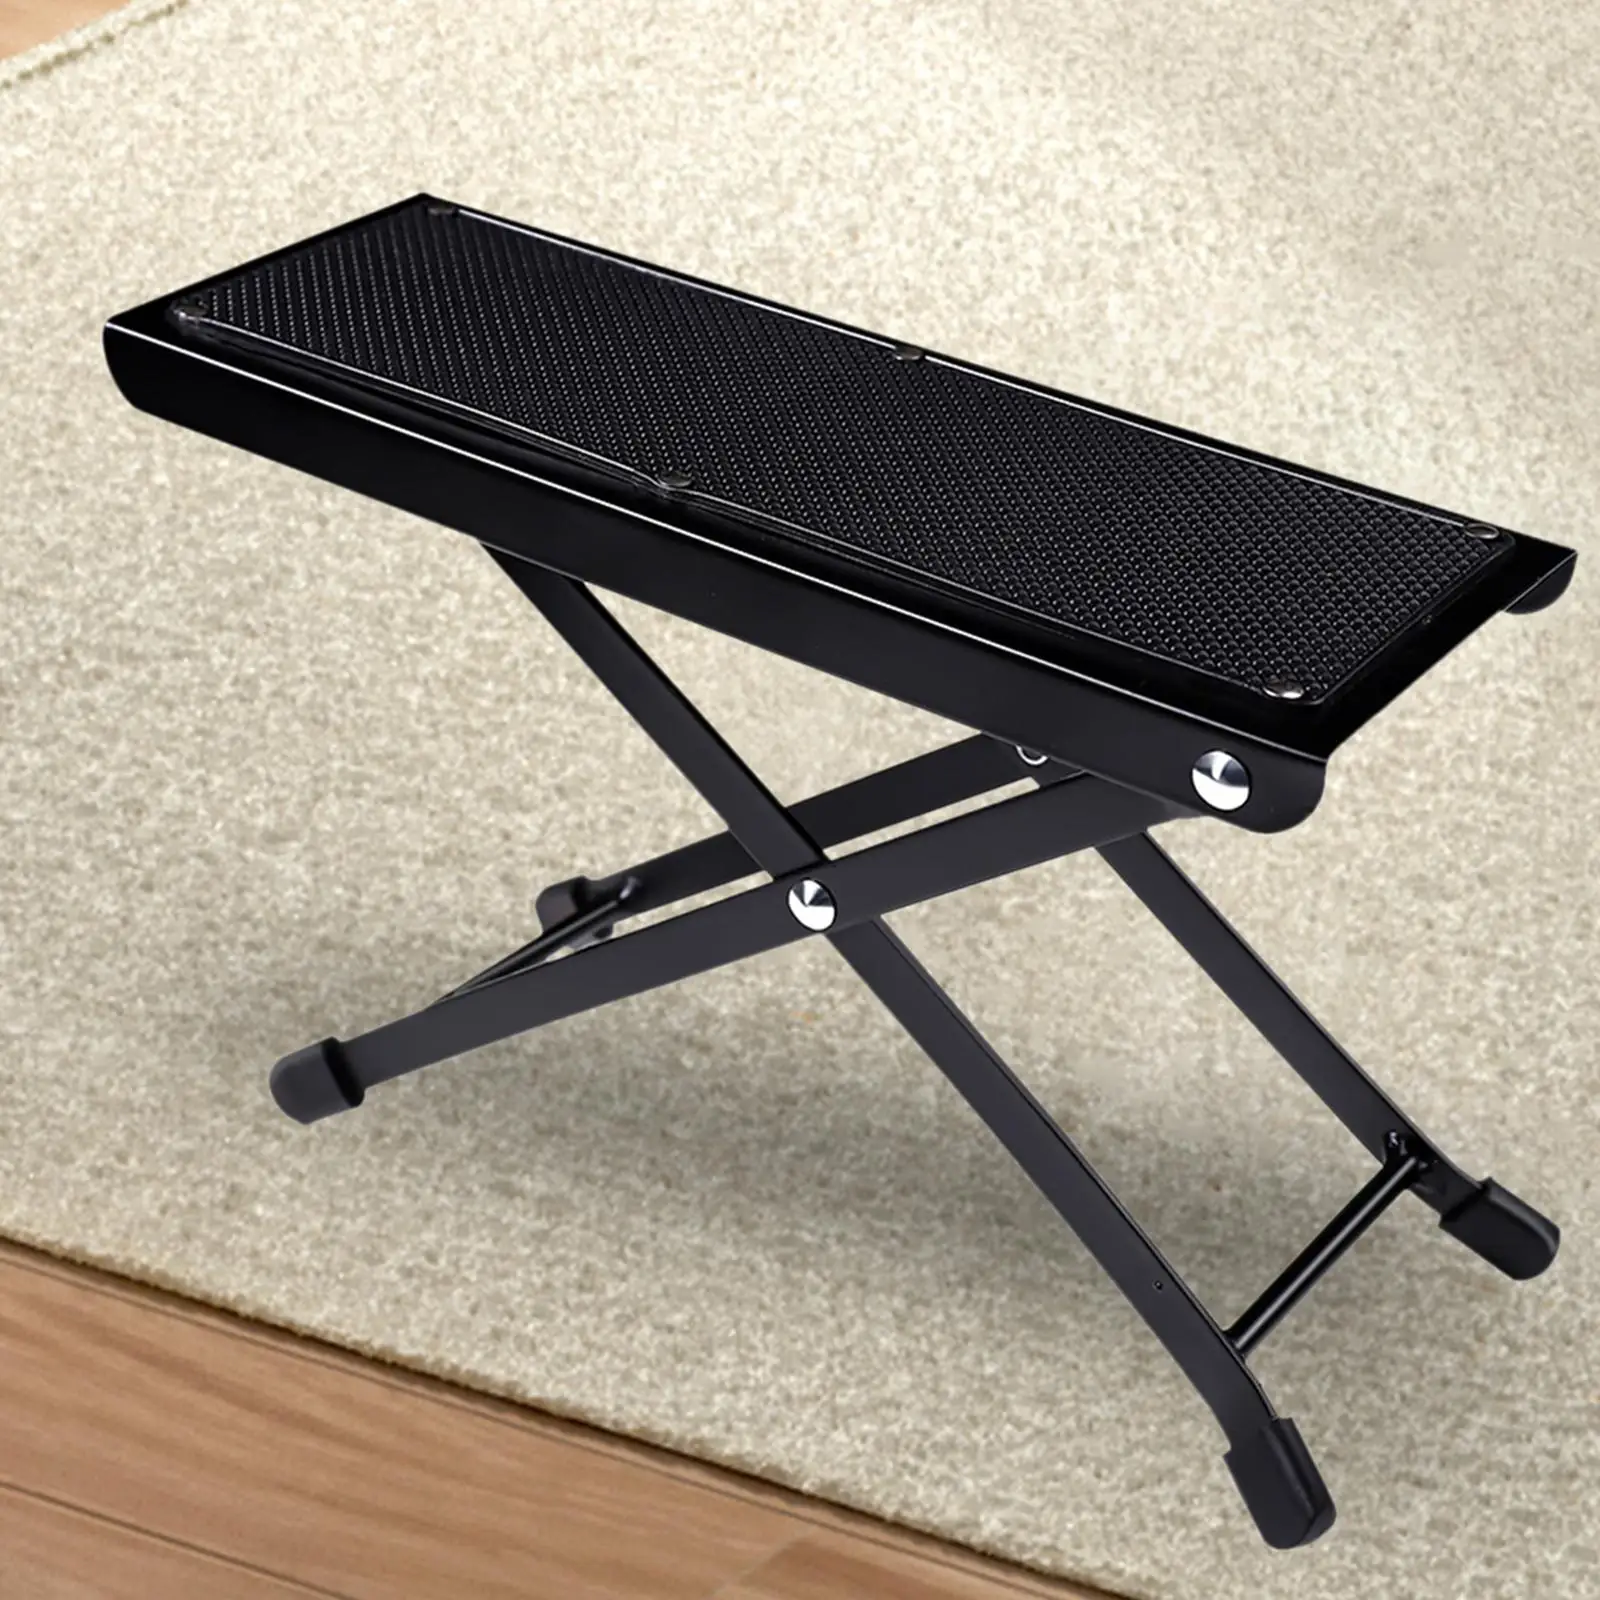 Pedicure Desk Footrest Adjustable Angles Toenails Rest Cushion for Home